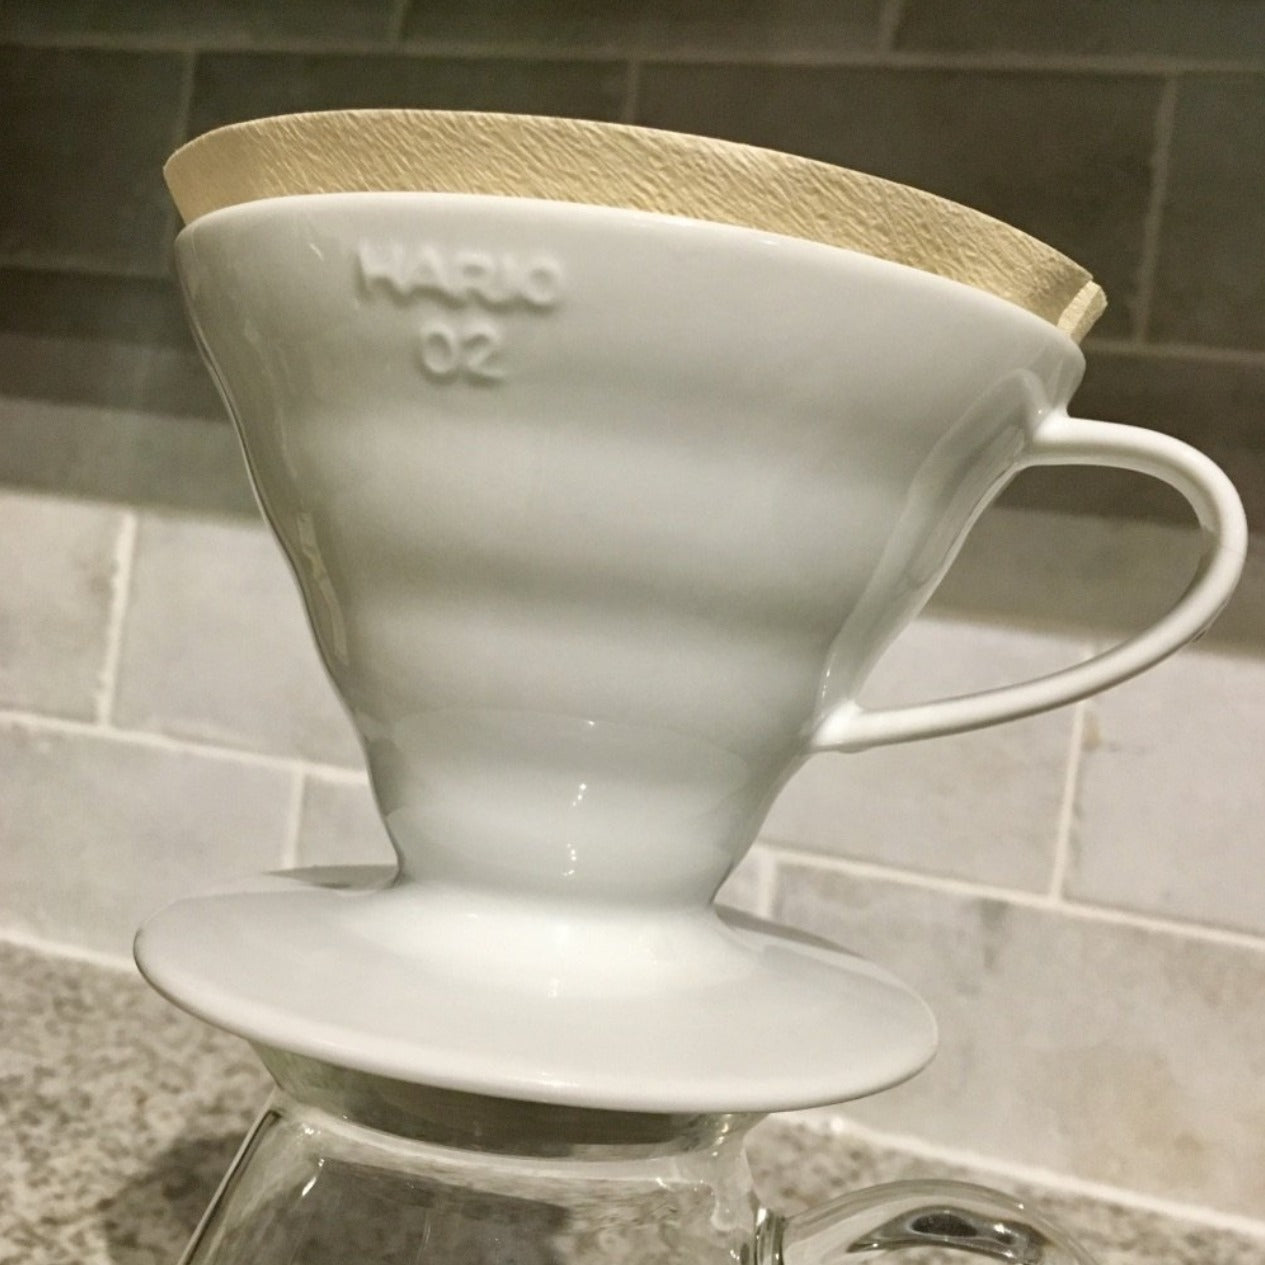 Hario V60 Coffee Dripper photo